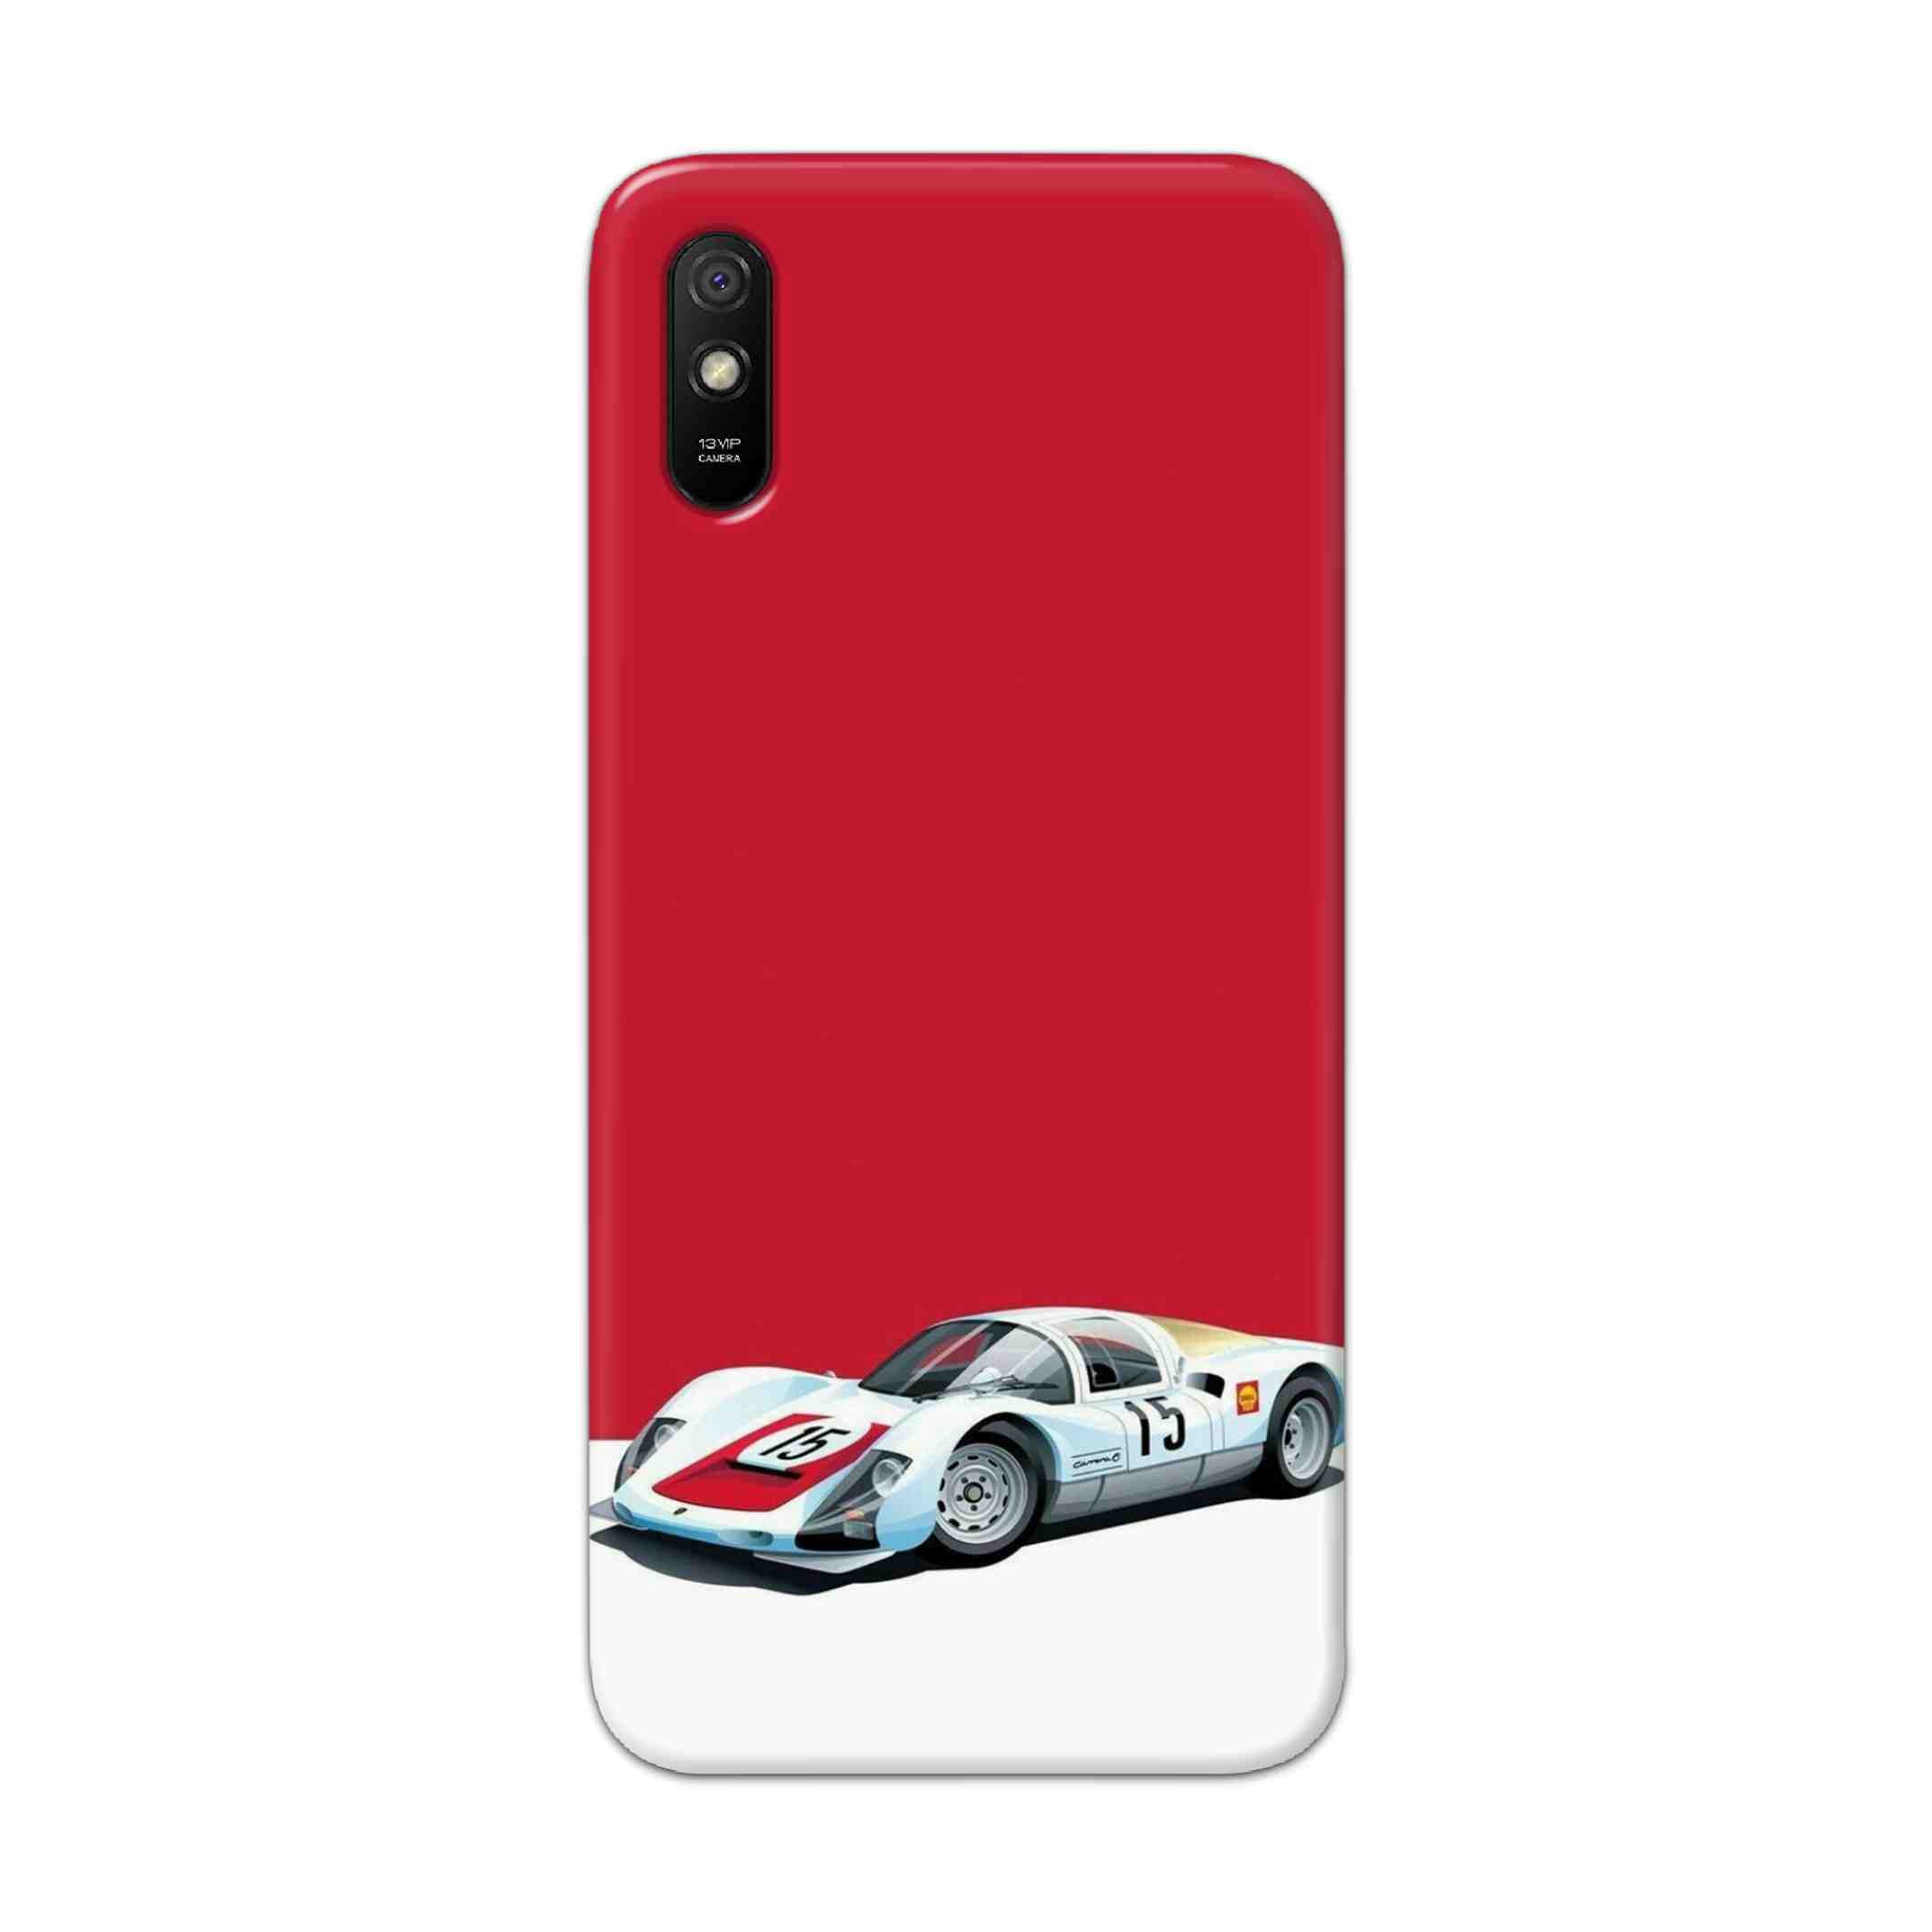 Buy Ferrari F15 Hard Back Mobile Phone Case Cover For Redmi 9A Online